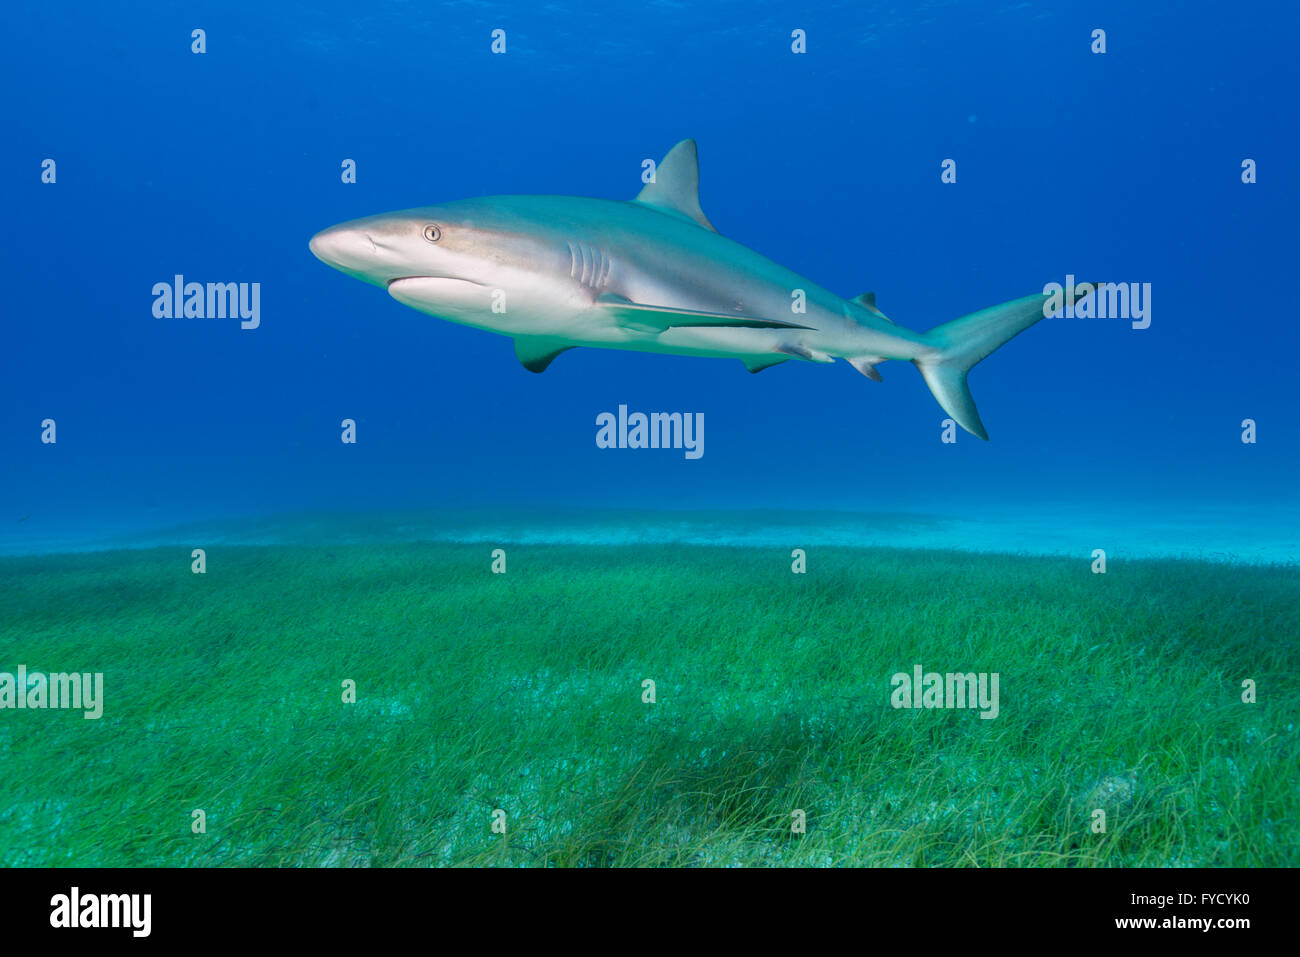 El tiburón de arrecife del Caribe, Carcharhinus perezi, nadar a través de algas, Bahamas Foto de stock